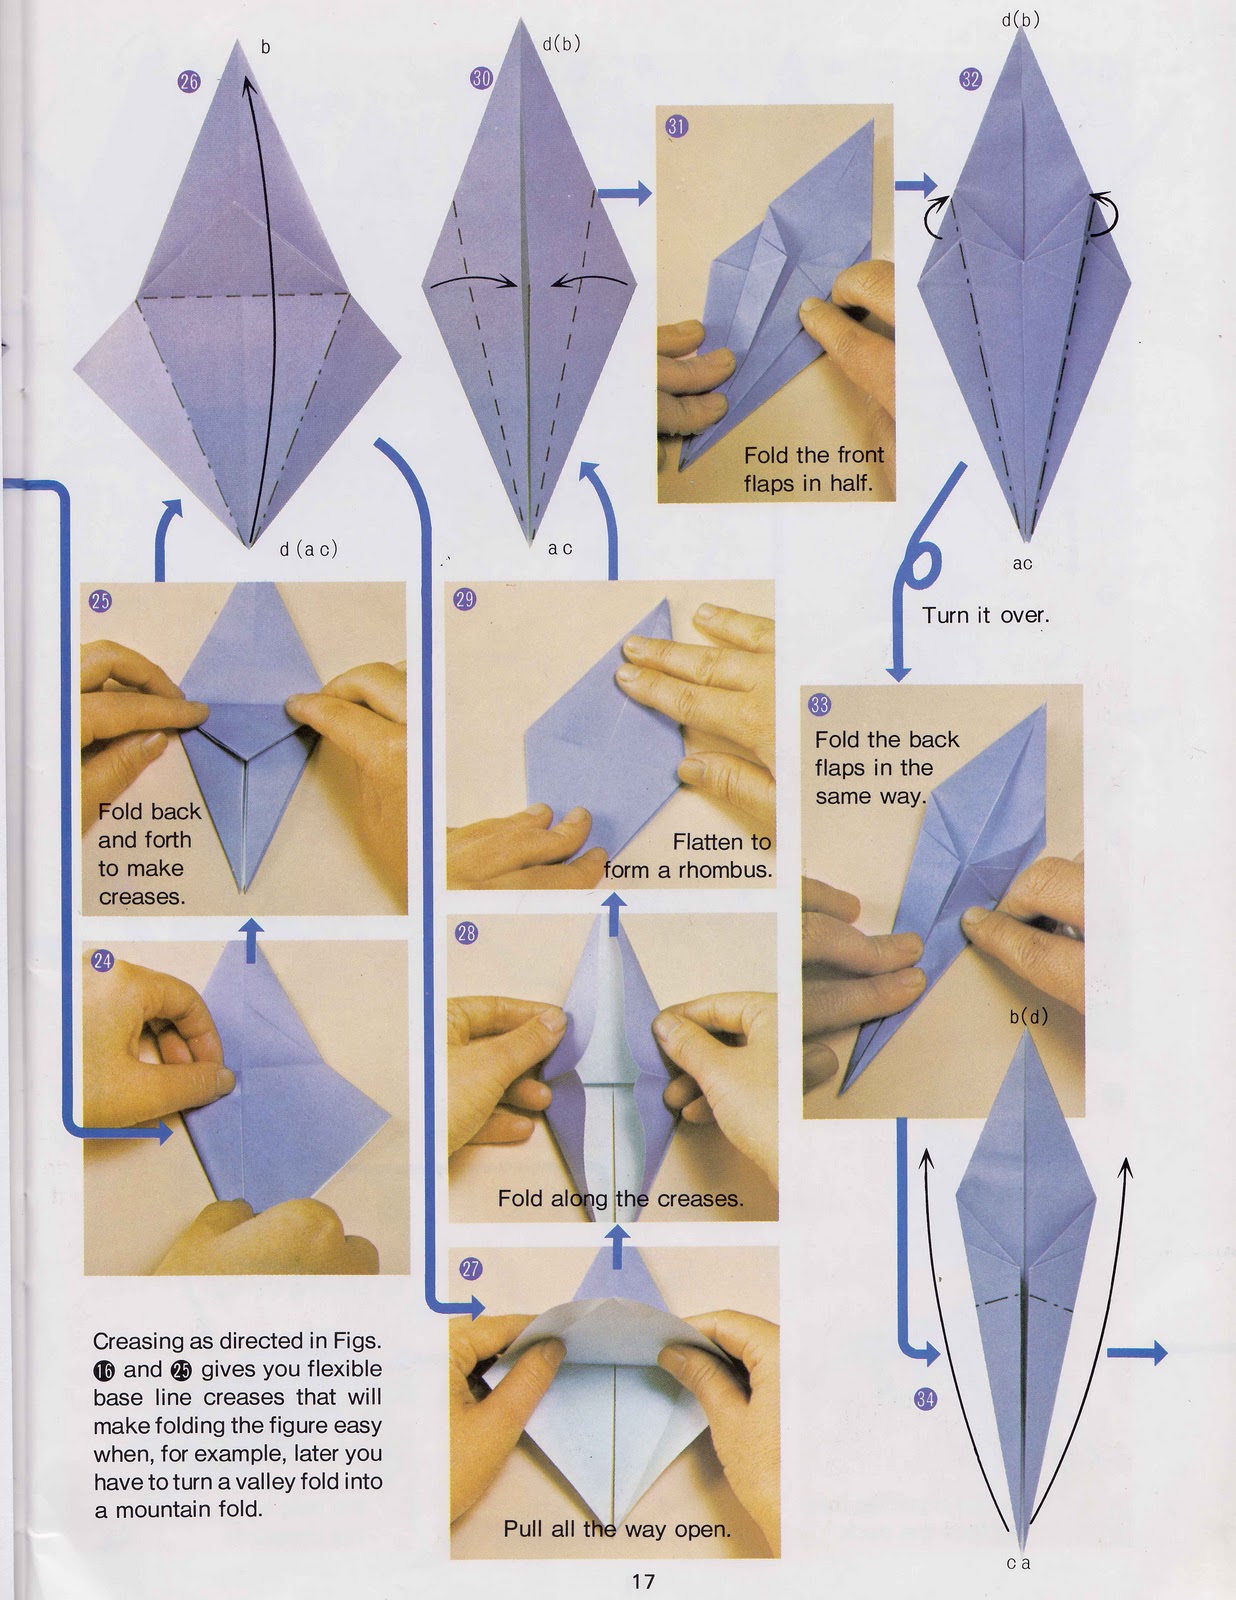 Оригами журавль поэтапно